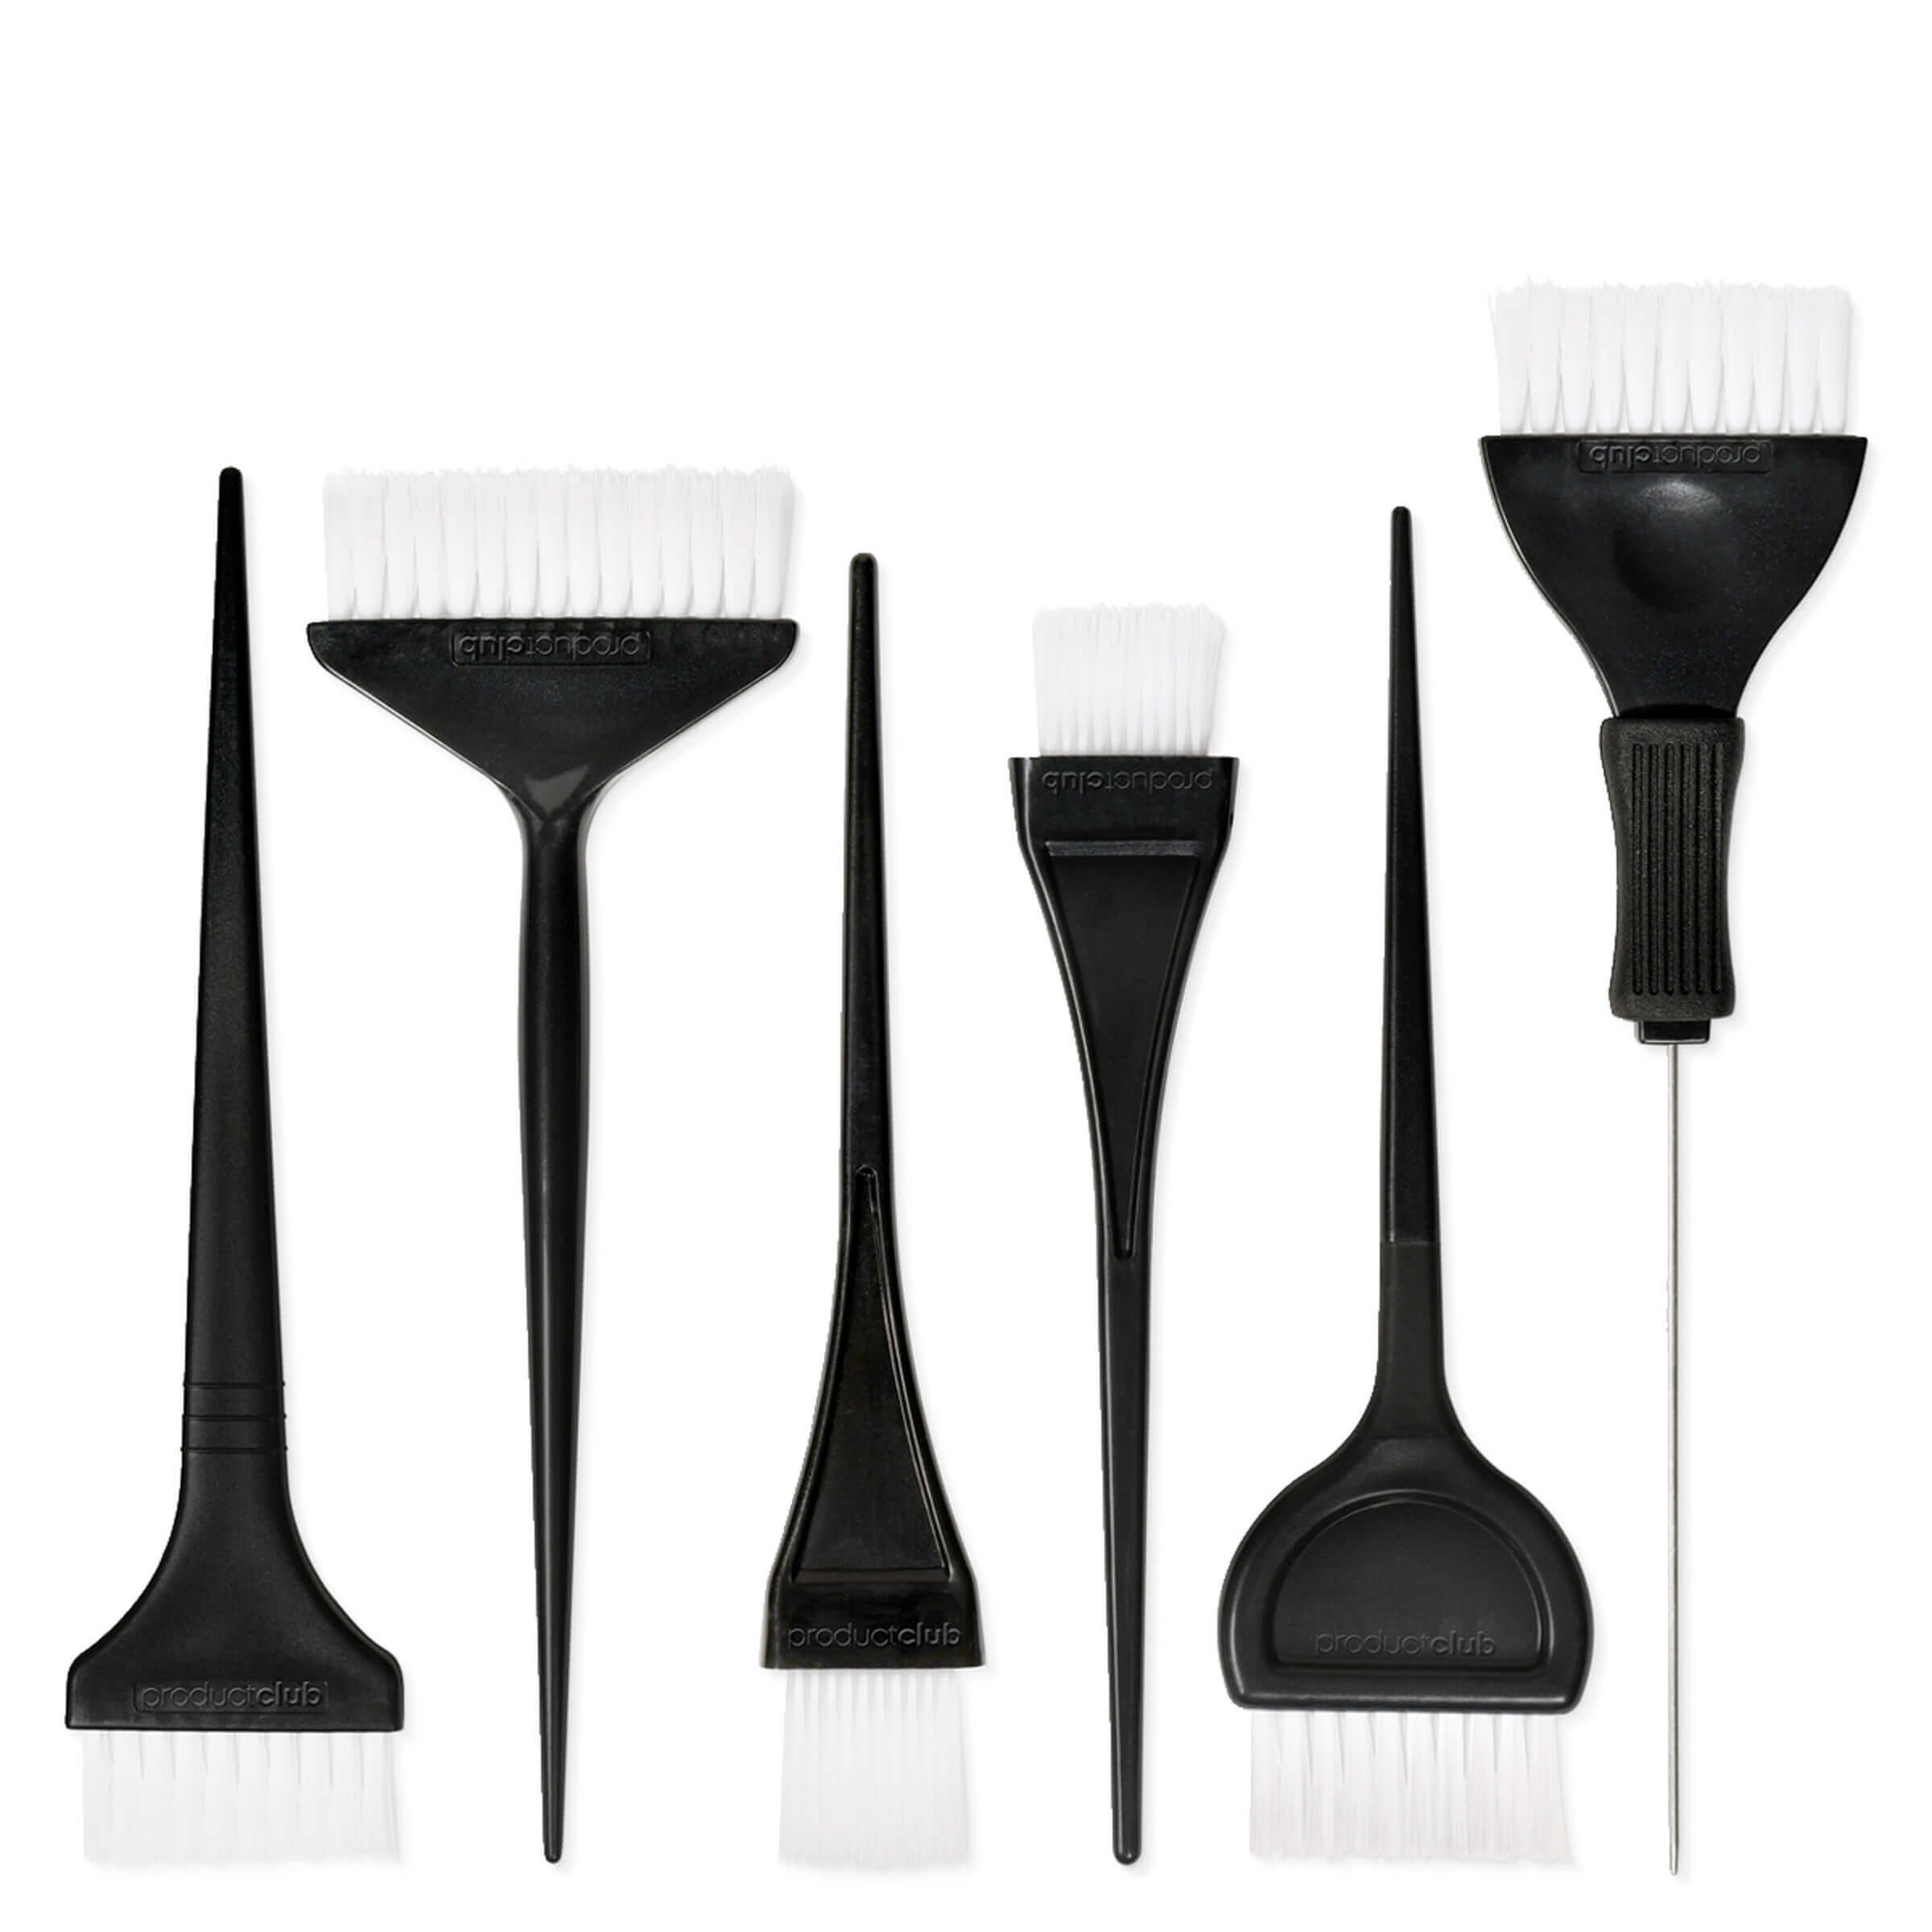 FBB-SET Feather Hair Bleach Brush Set